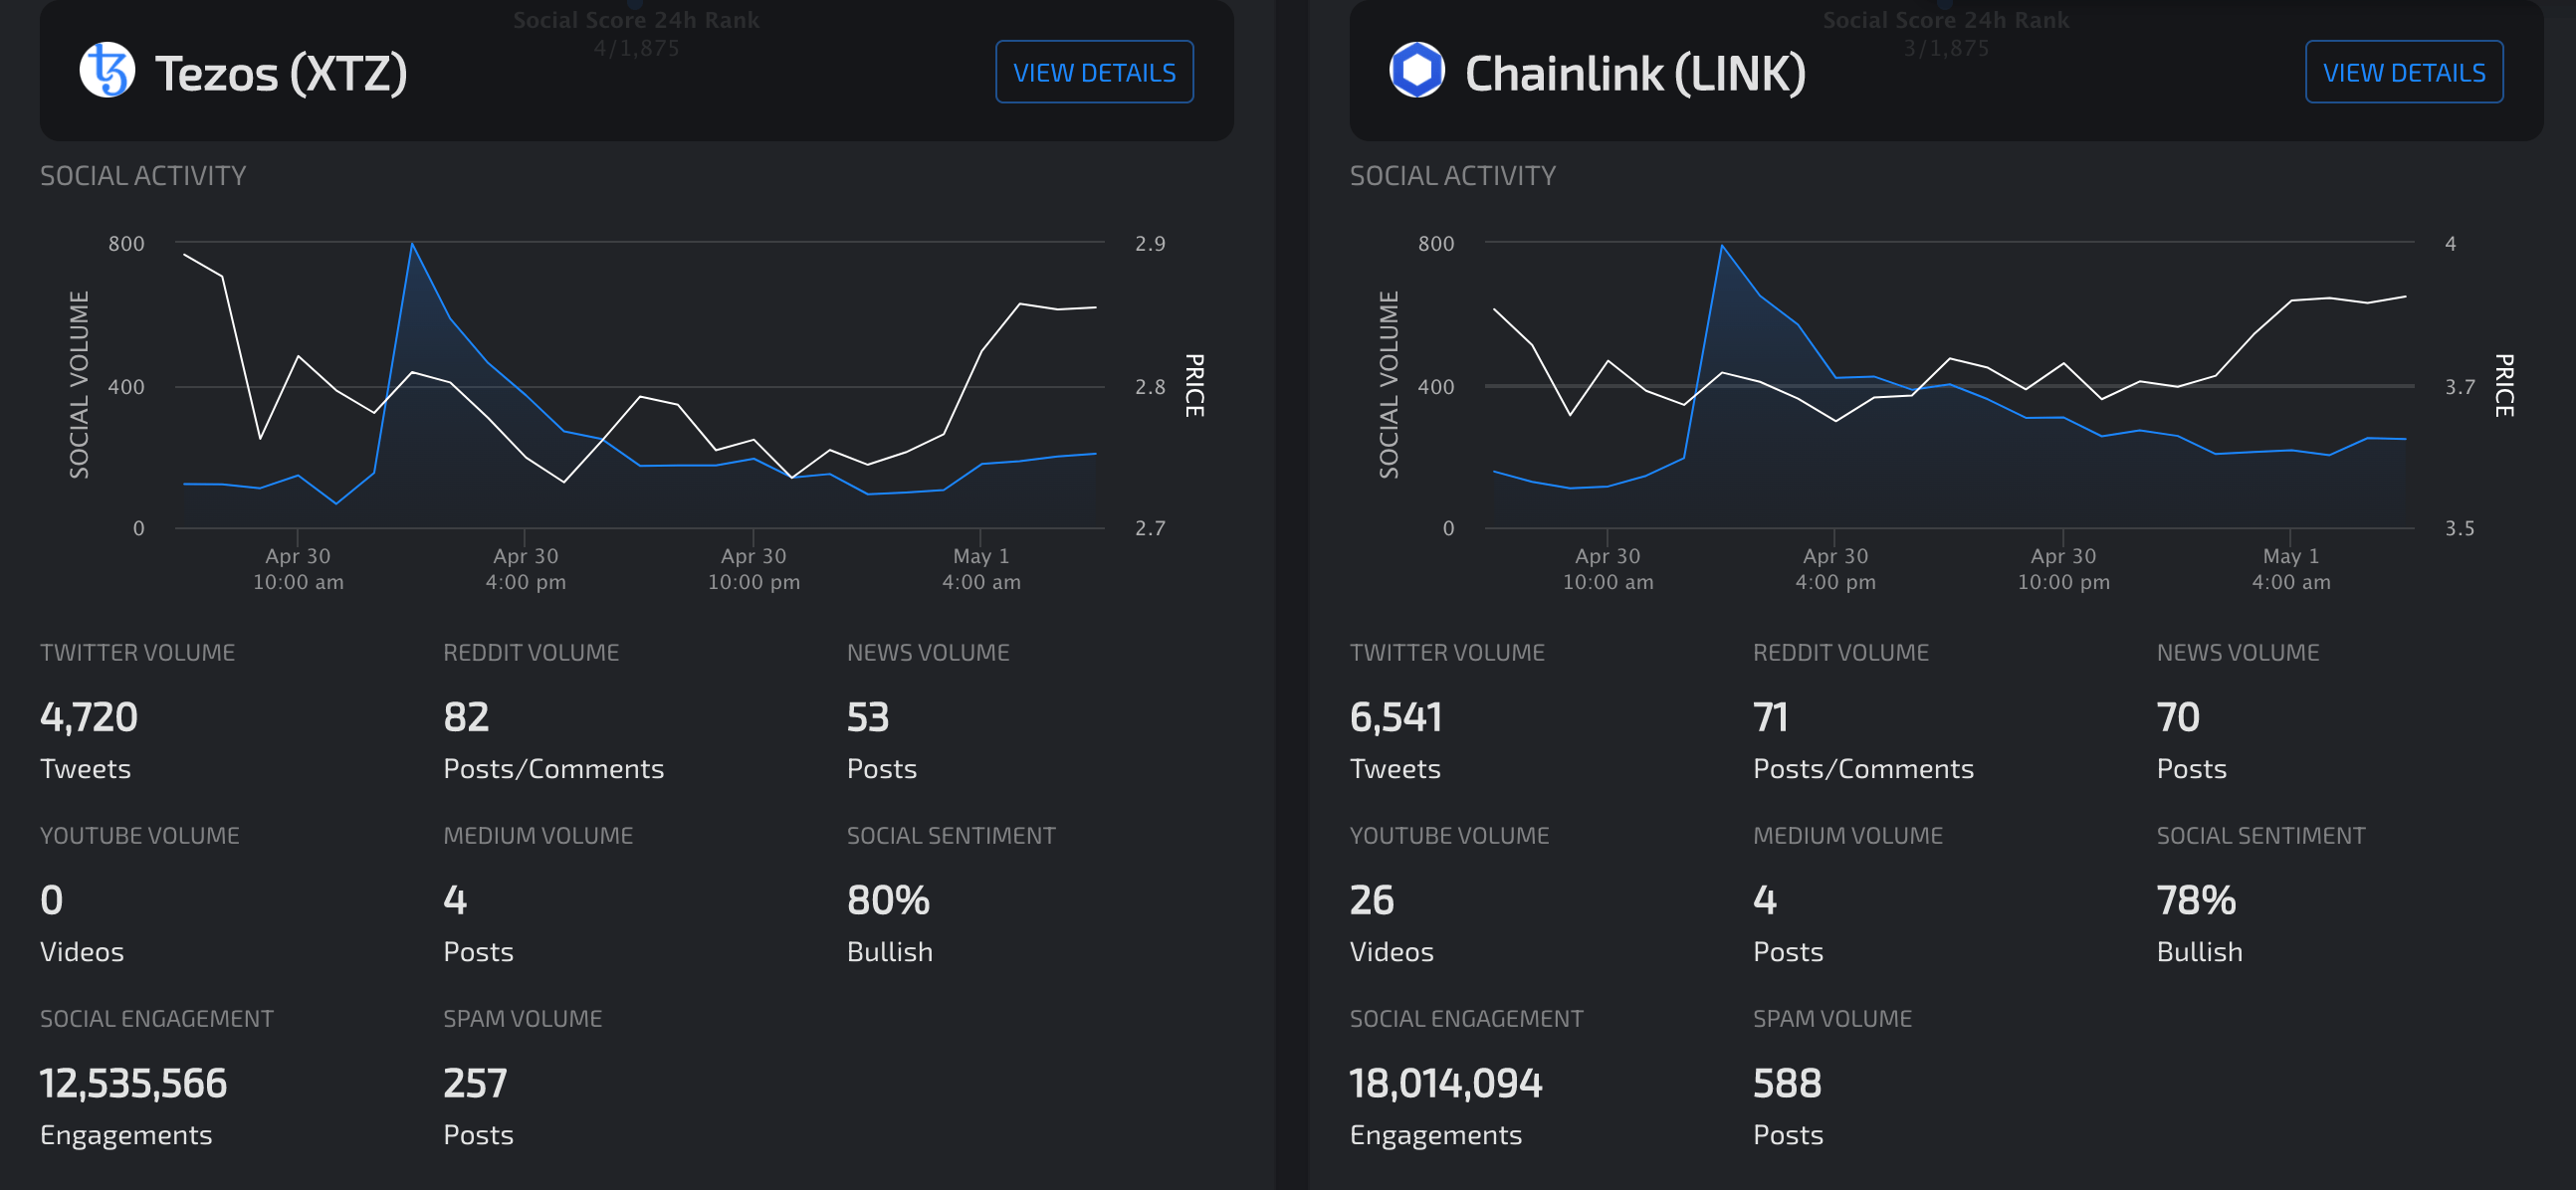 Tezos vs. Chainlink Social Engagement Metrics. (Source: LunarCRUSH)